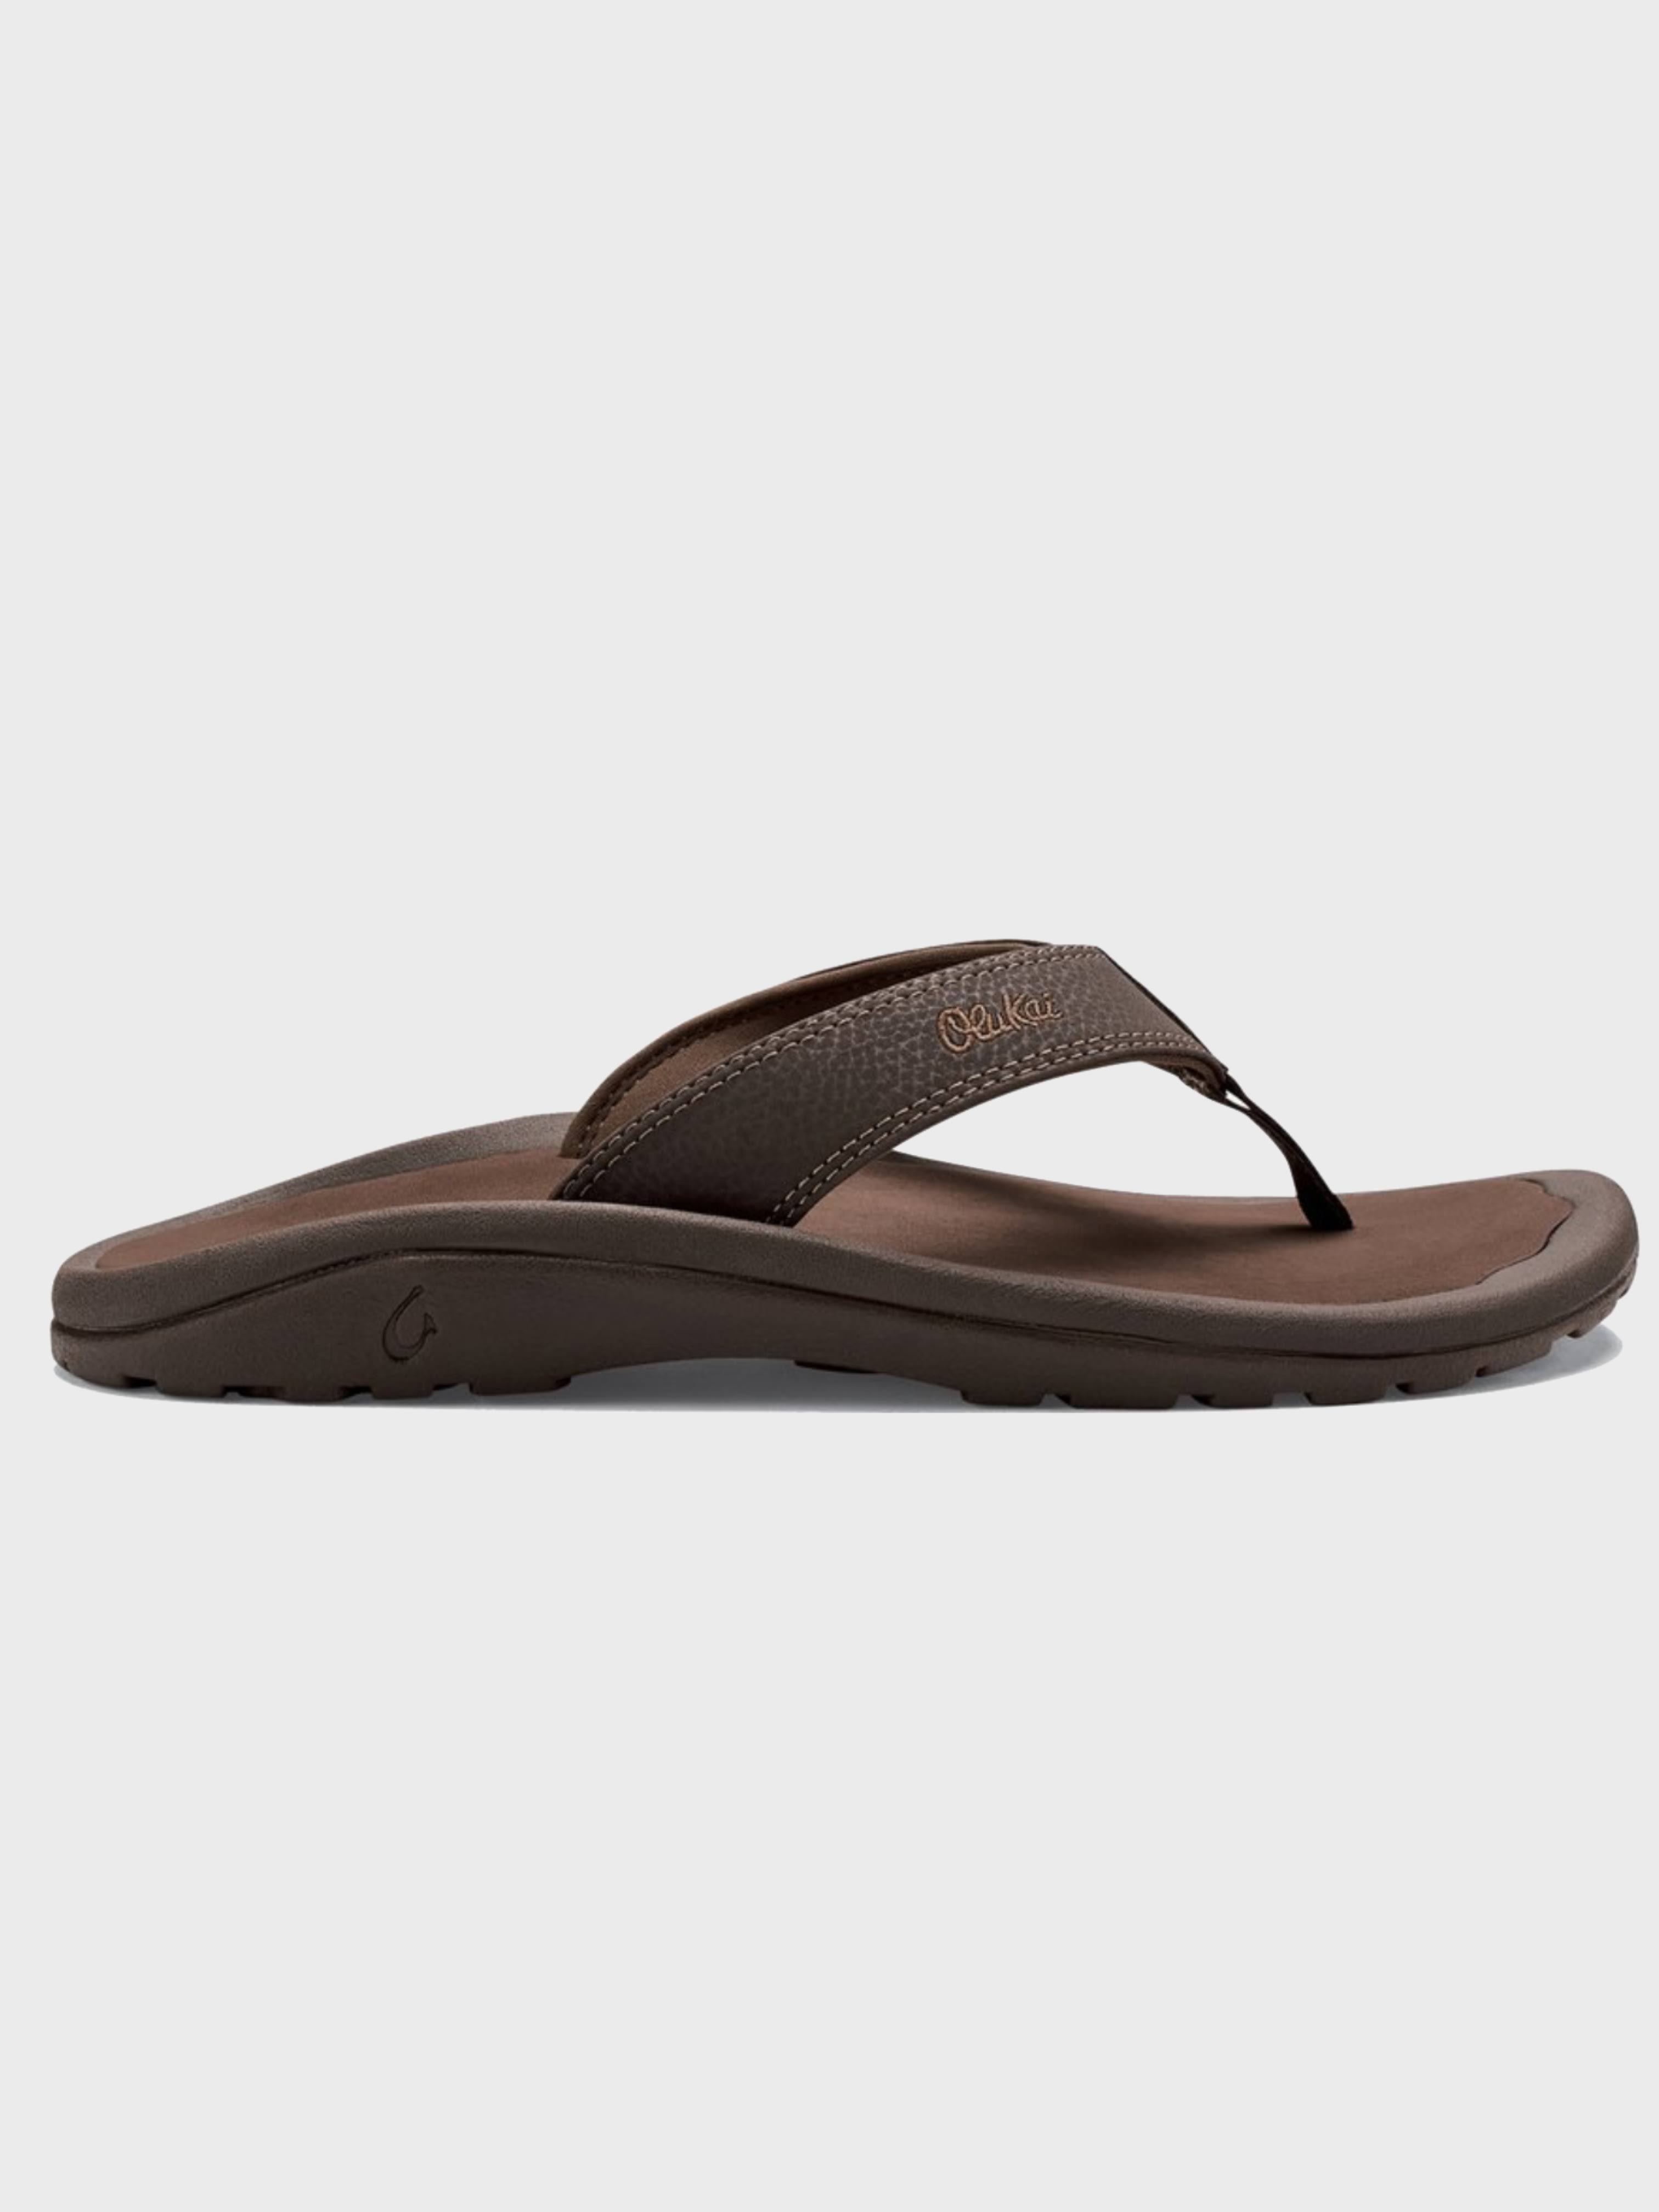 OluKai Men's Ohana Dark Java Ray Flip Flops Sandals - 10 US